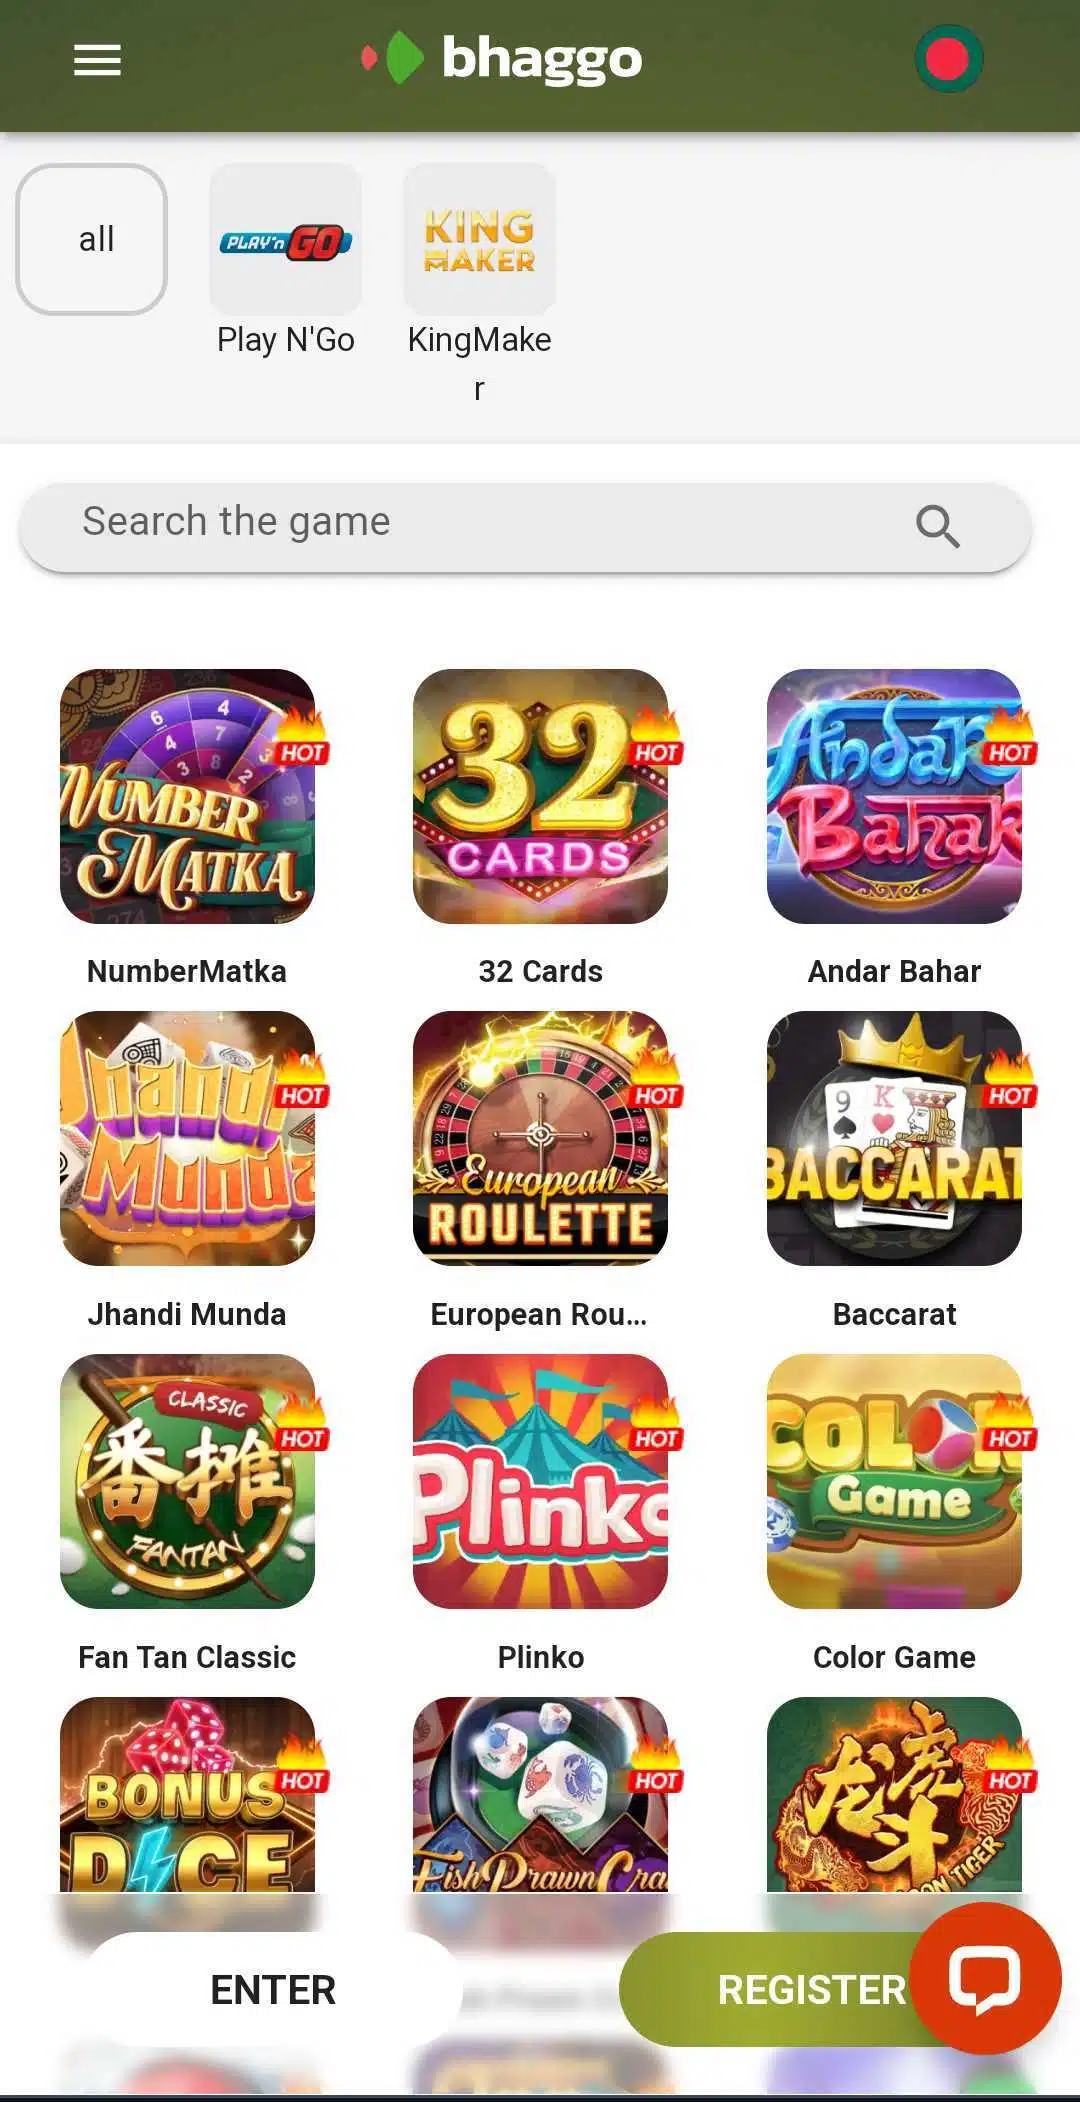 Bhaggo-casino-games-image-1